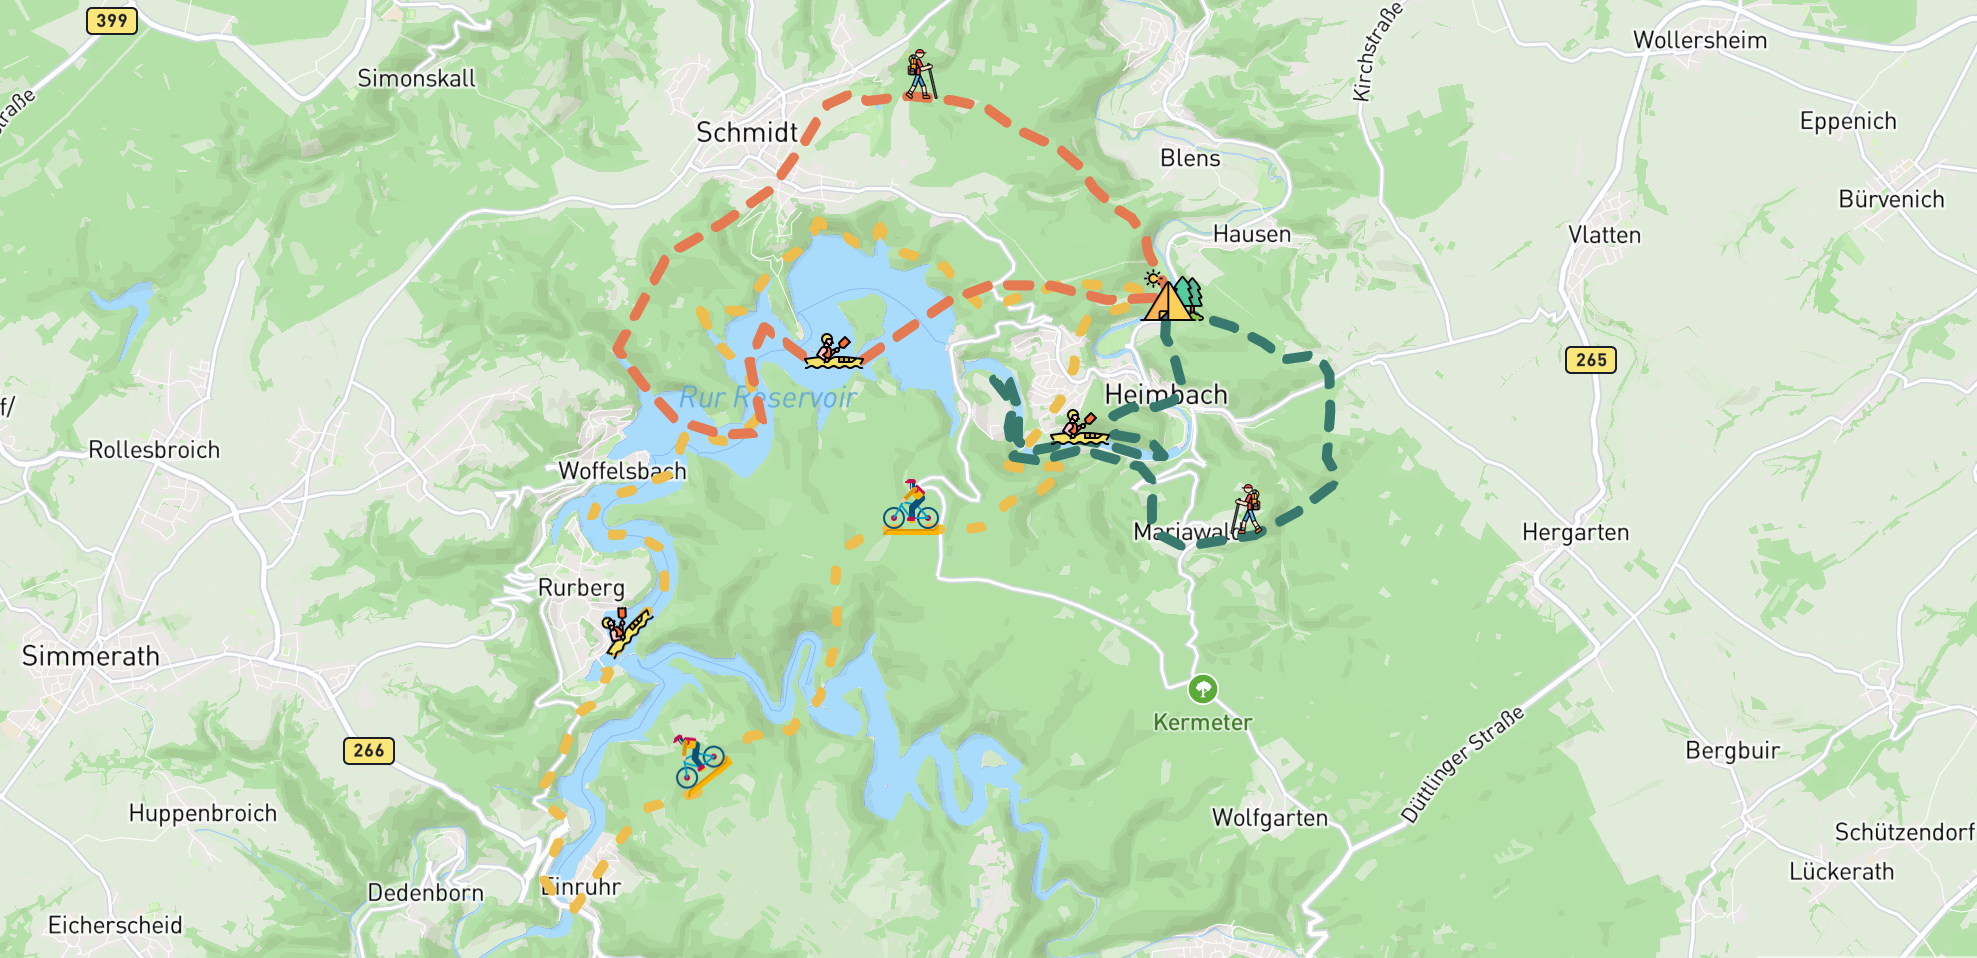 Packraft Eifel Germany trails map